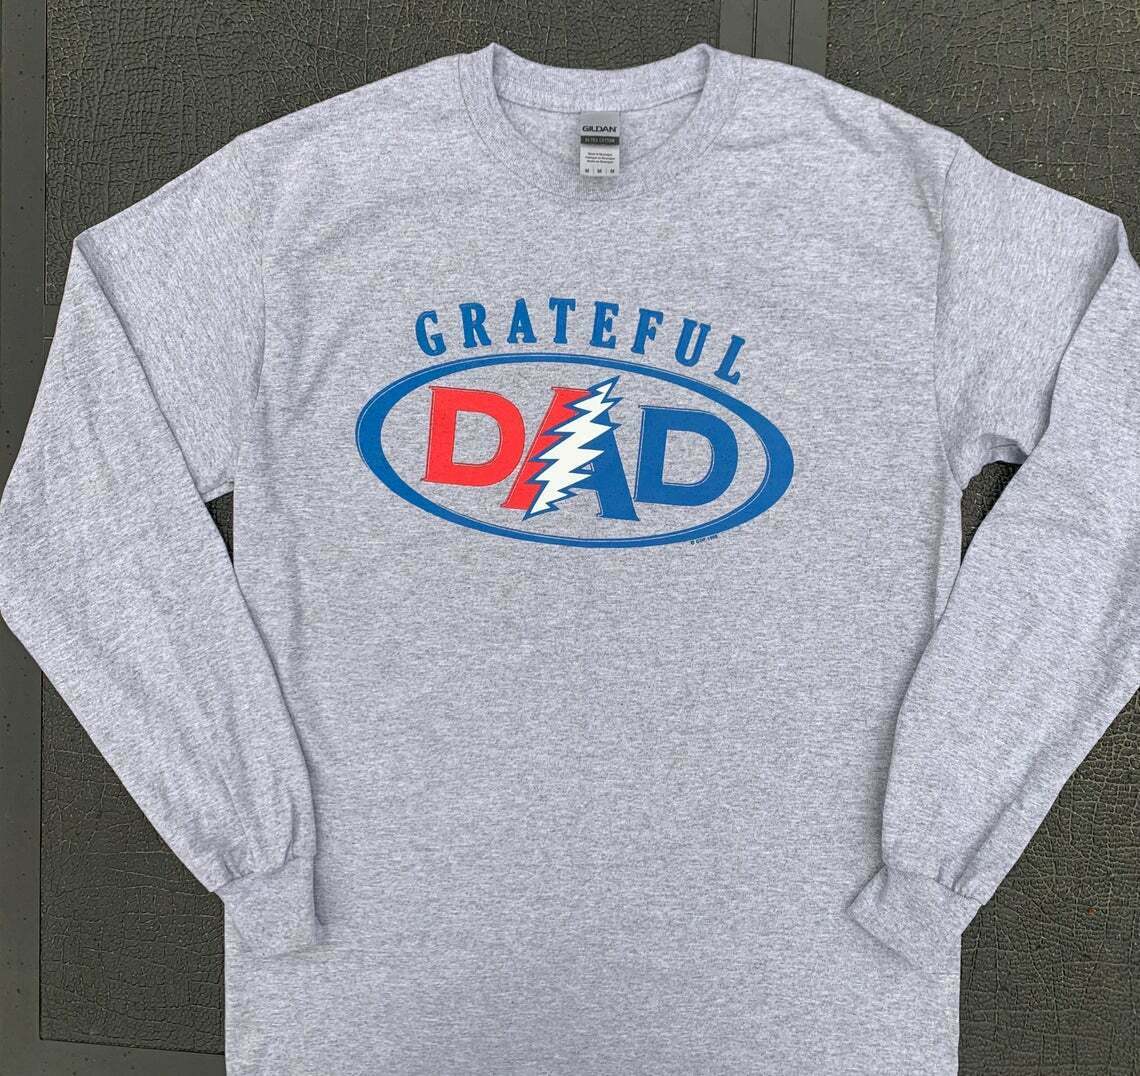 Grateful Dad long sleeve shirt - Long Sleeve Grateful Dead Dad shirt -  Father's Day gift - Grateful Dead gift - Baby shower Dad gift - Cool  Grateful